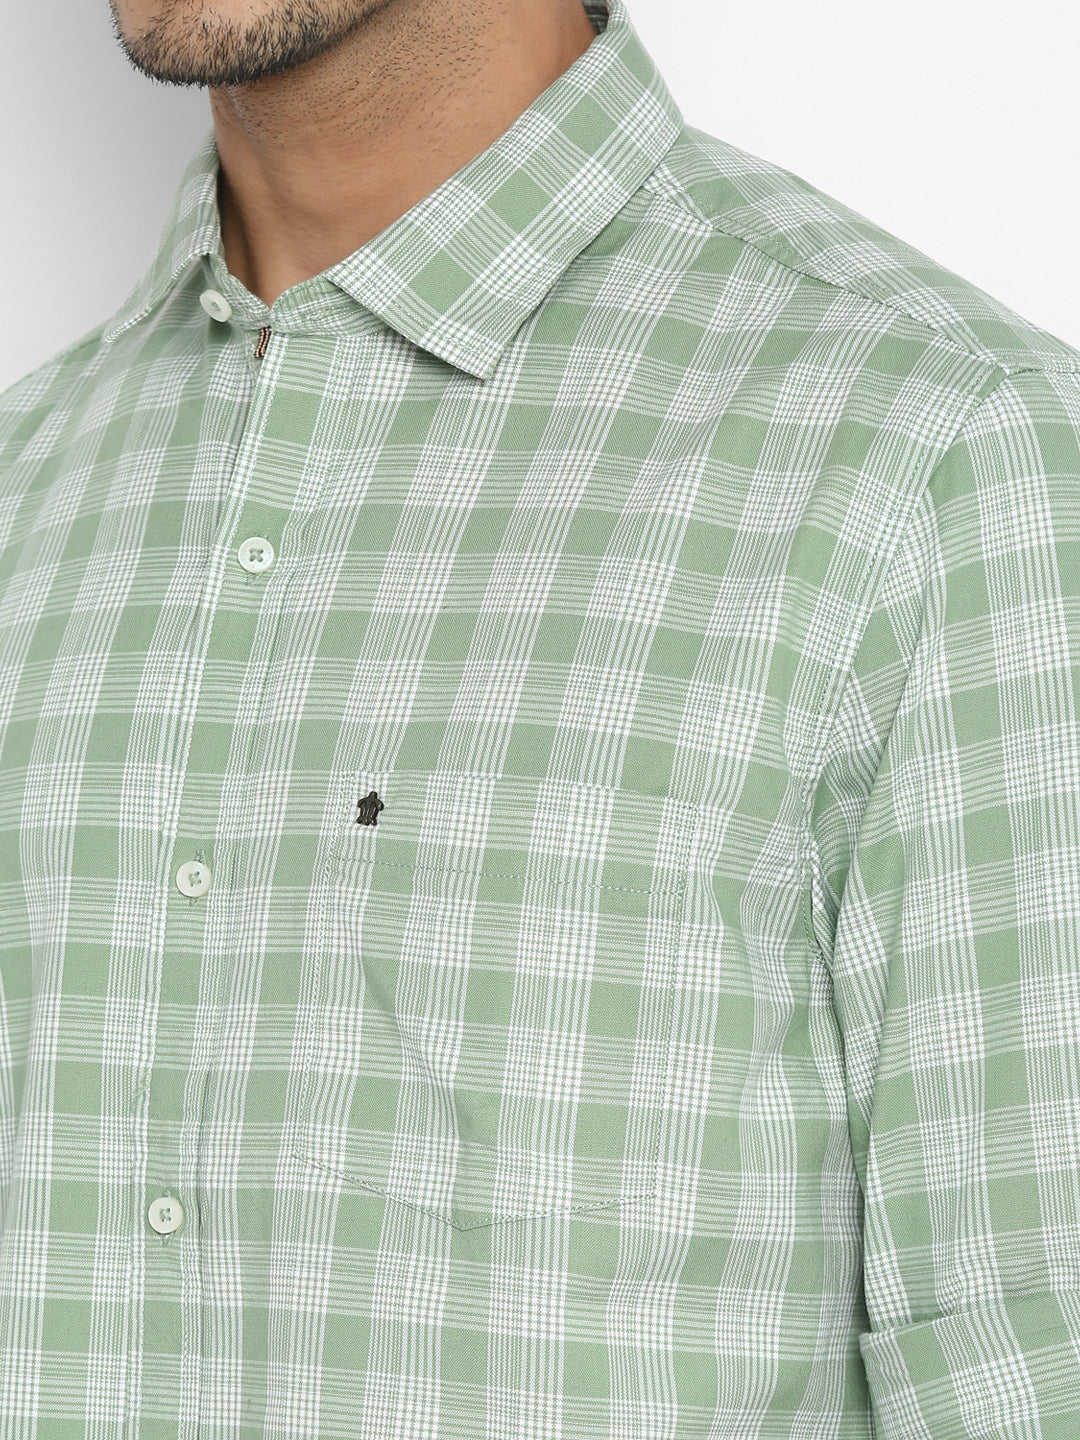 Turtle Men Cotton Light Green Slim Fit Checkered Shirts